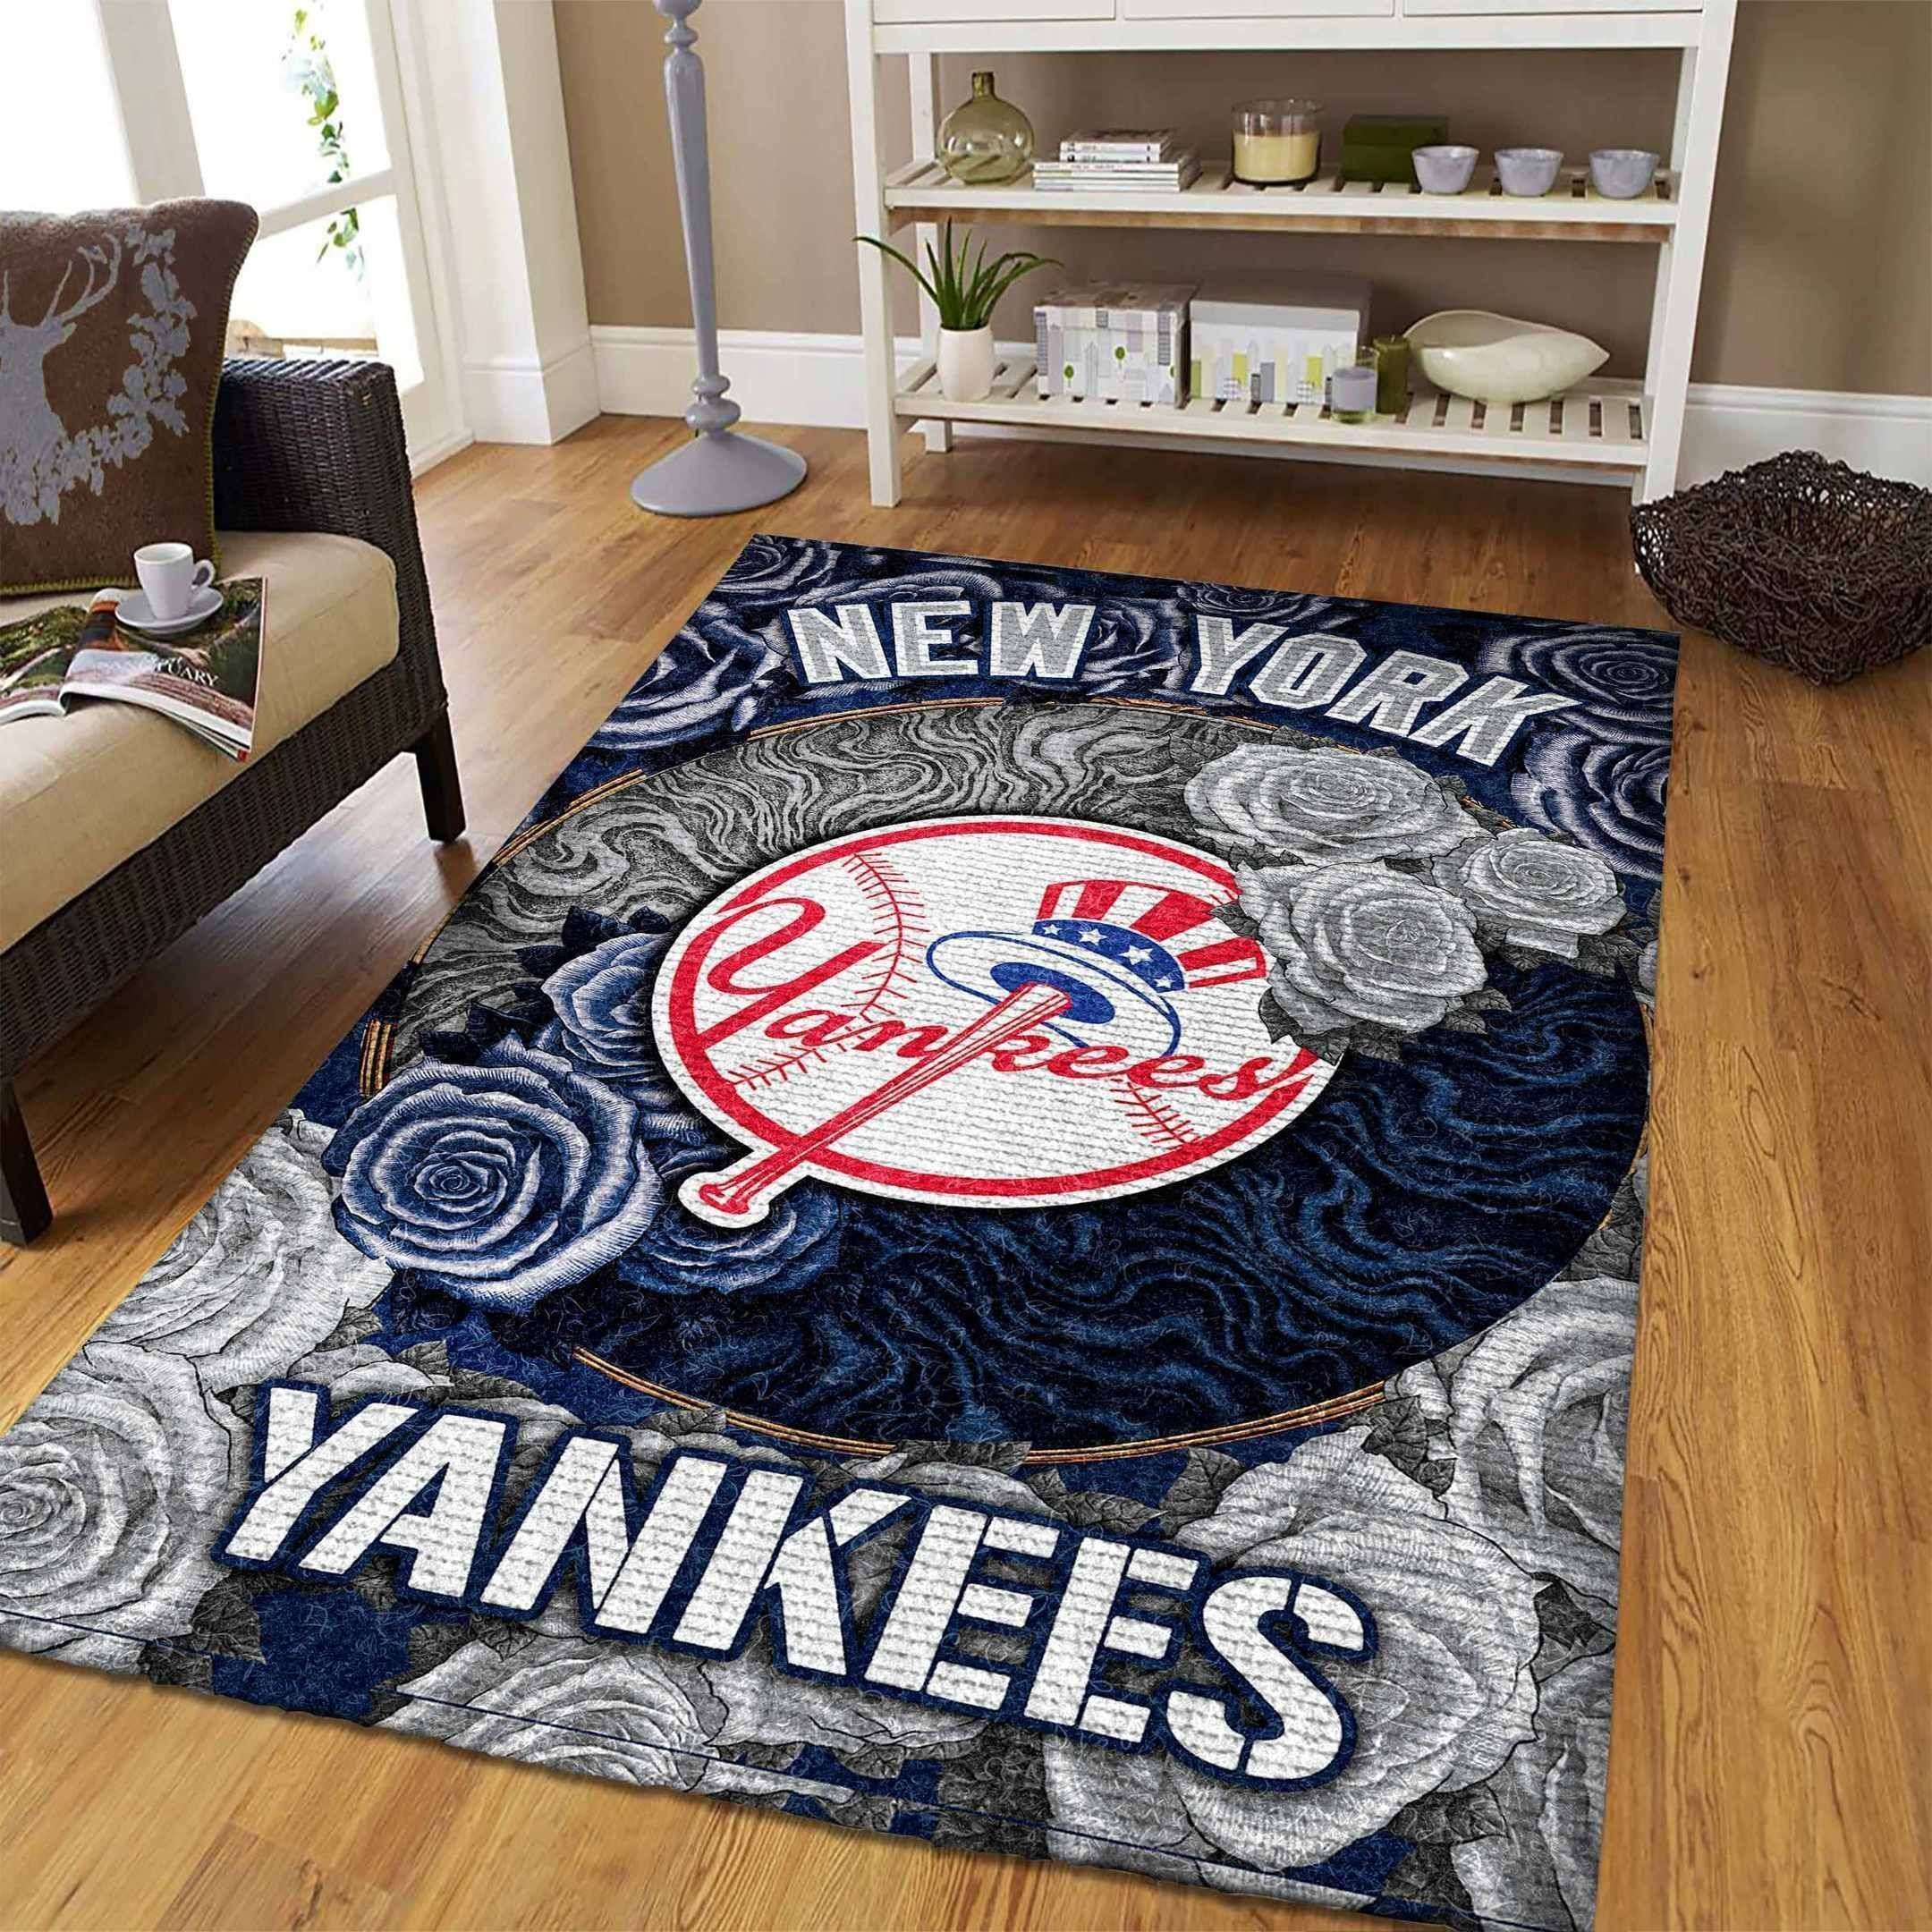 Amazon New York Yankees Living Room Area No4293 Rug